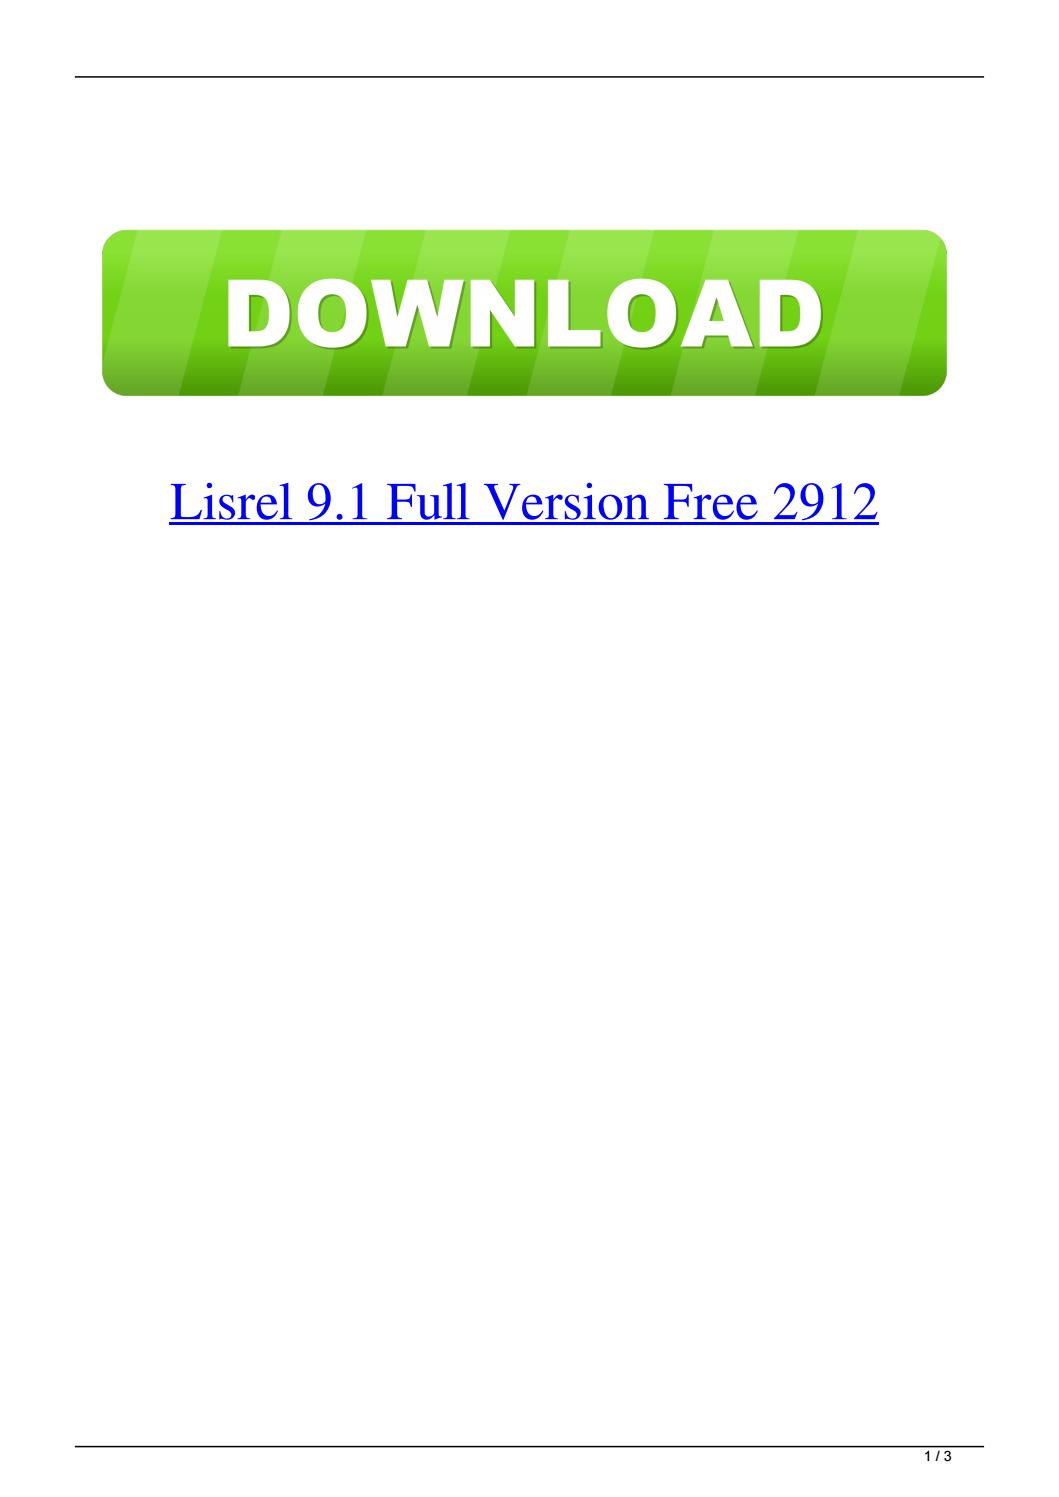 Lisrel for mac download free